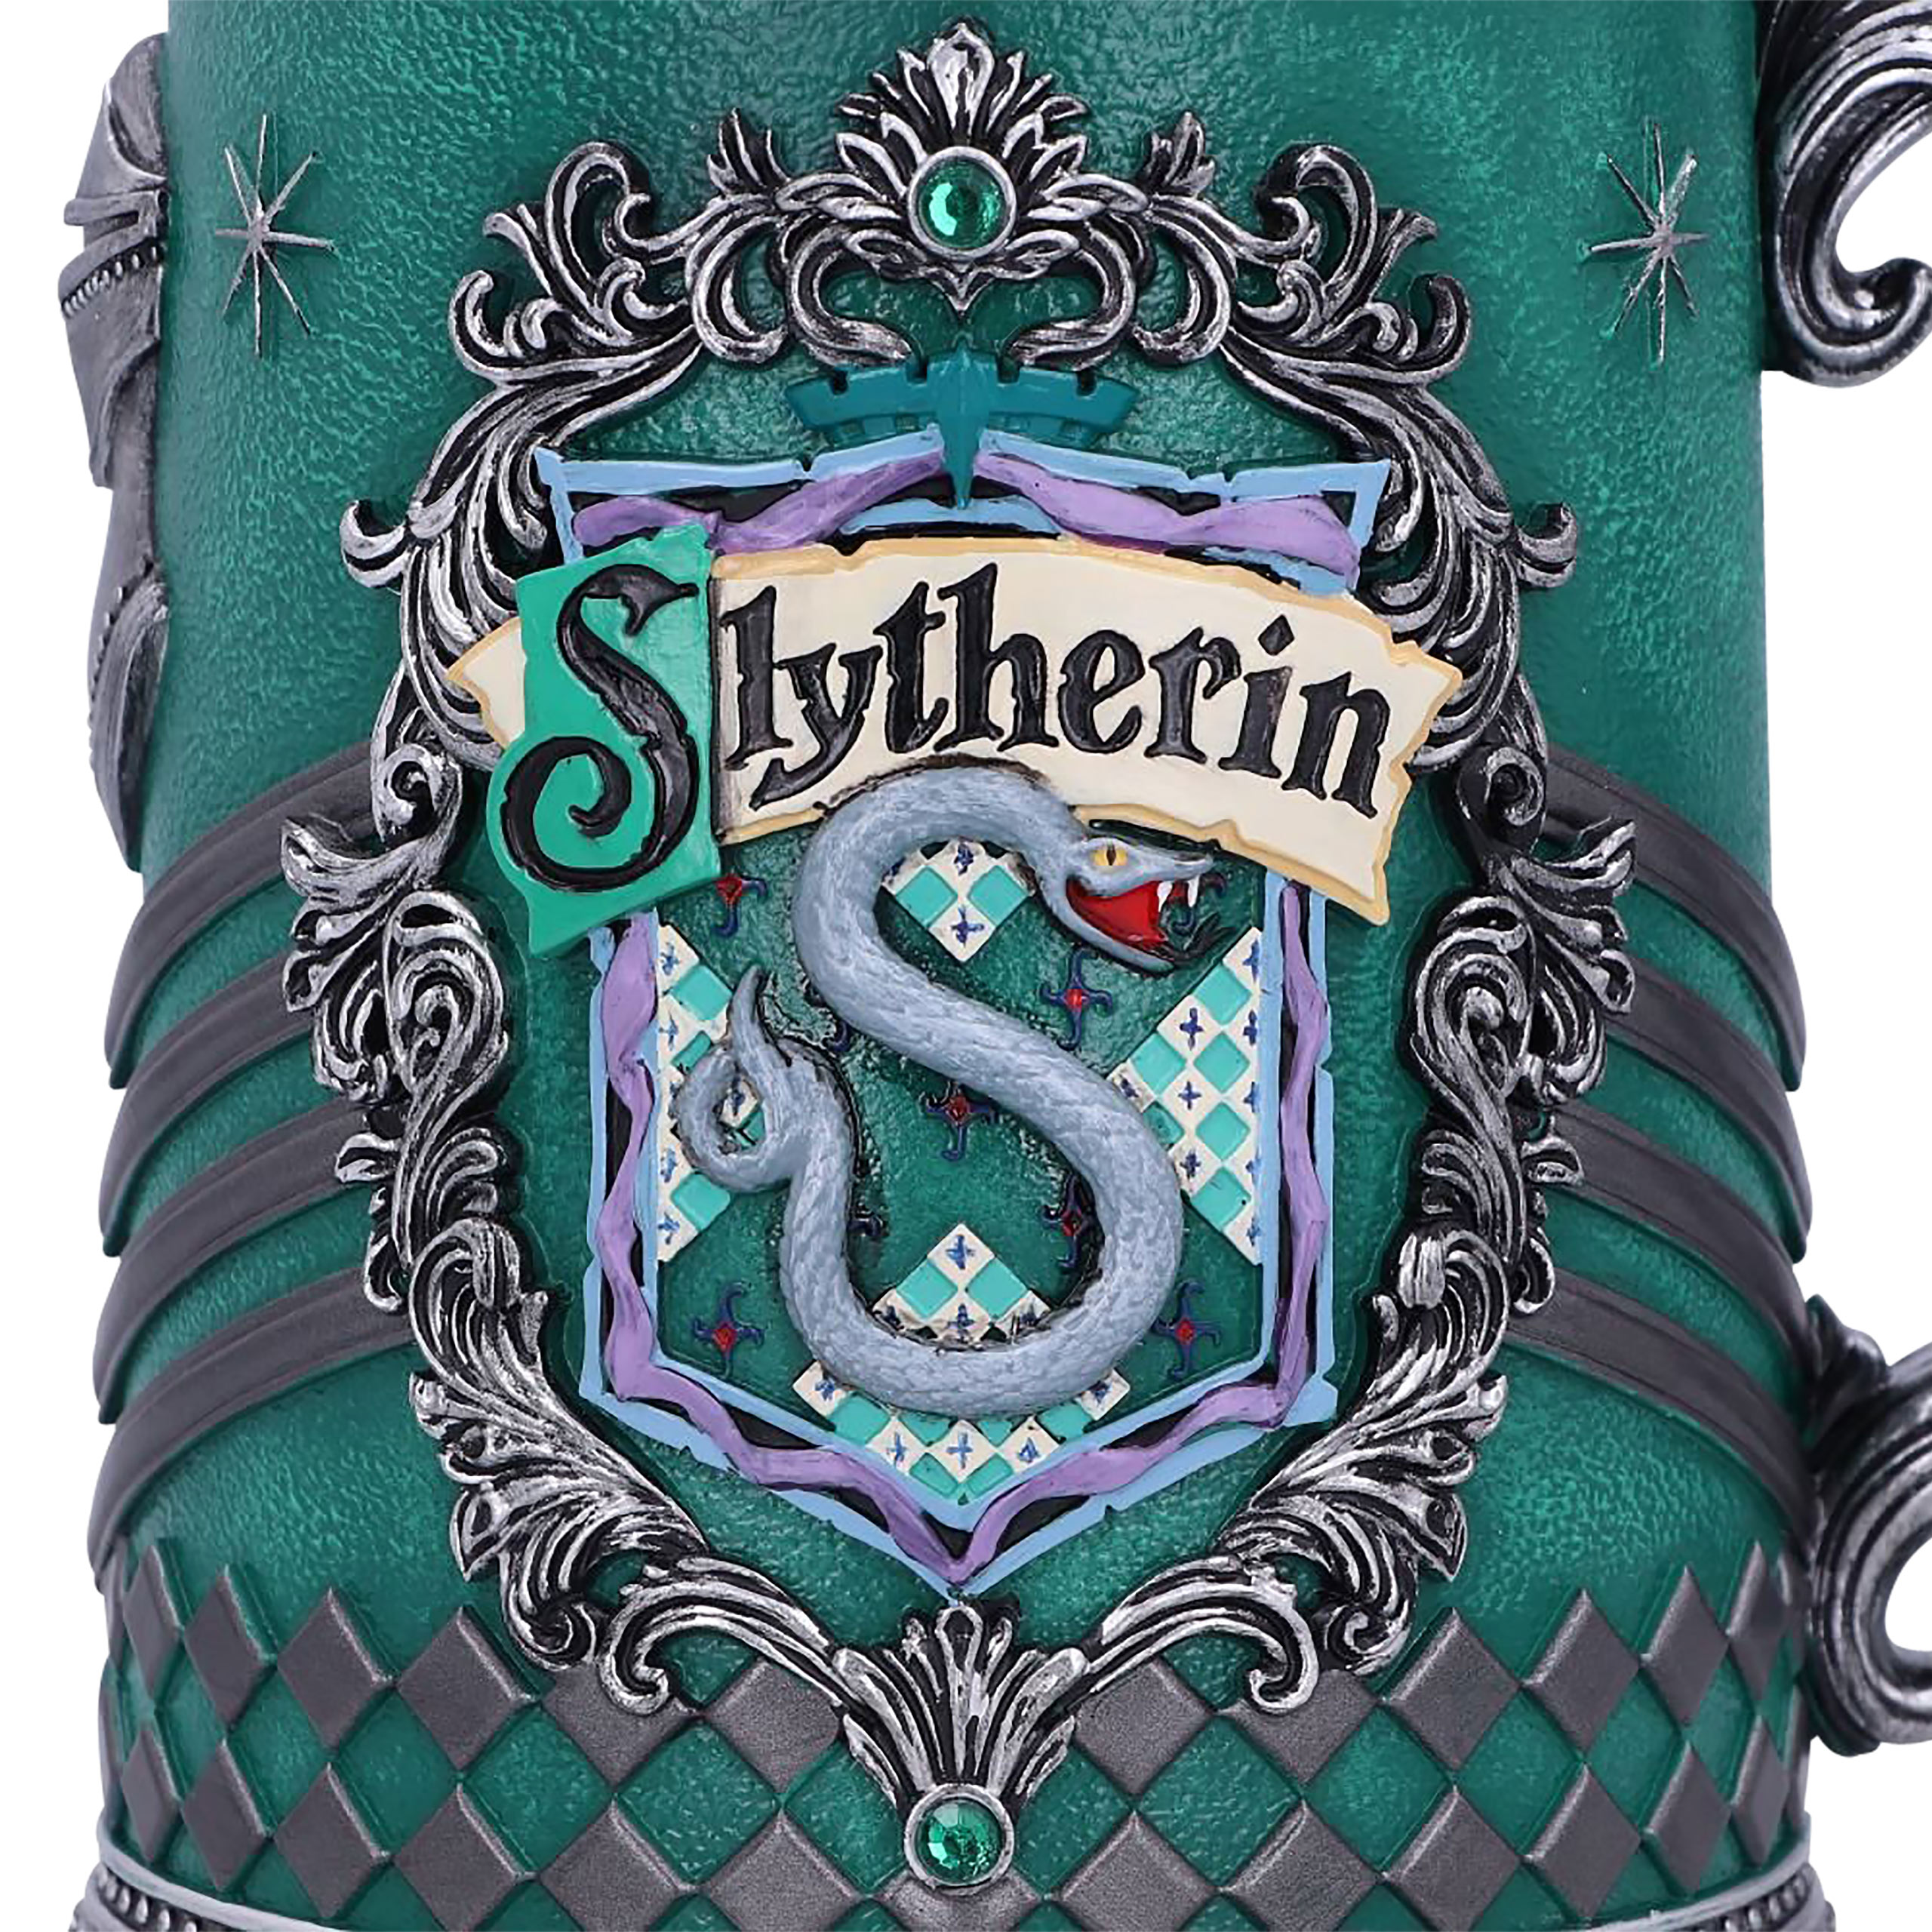 Harry Potter - Tasse de luxe avec le logo de Slytherin